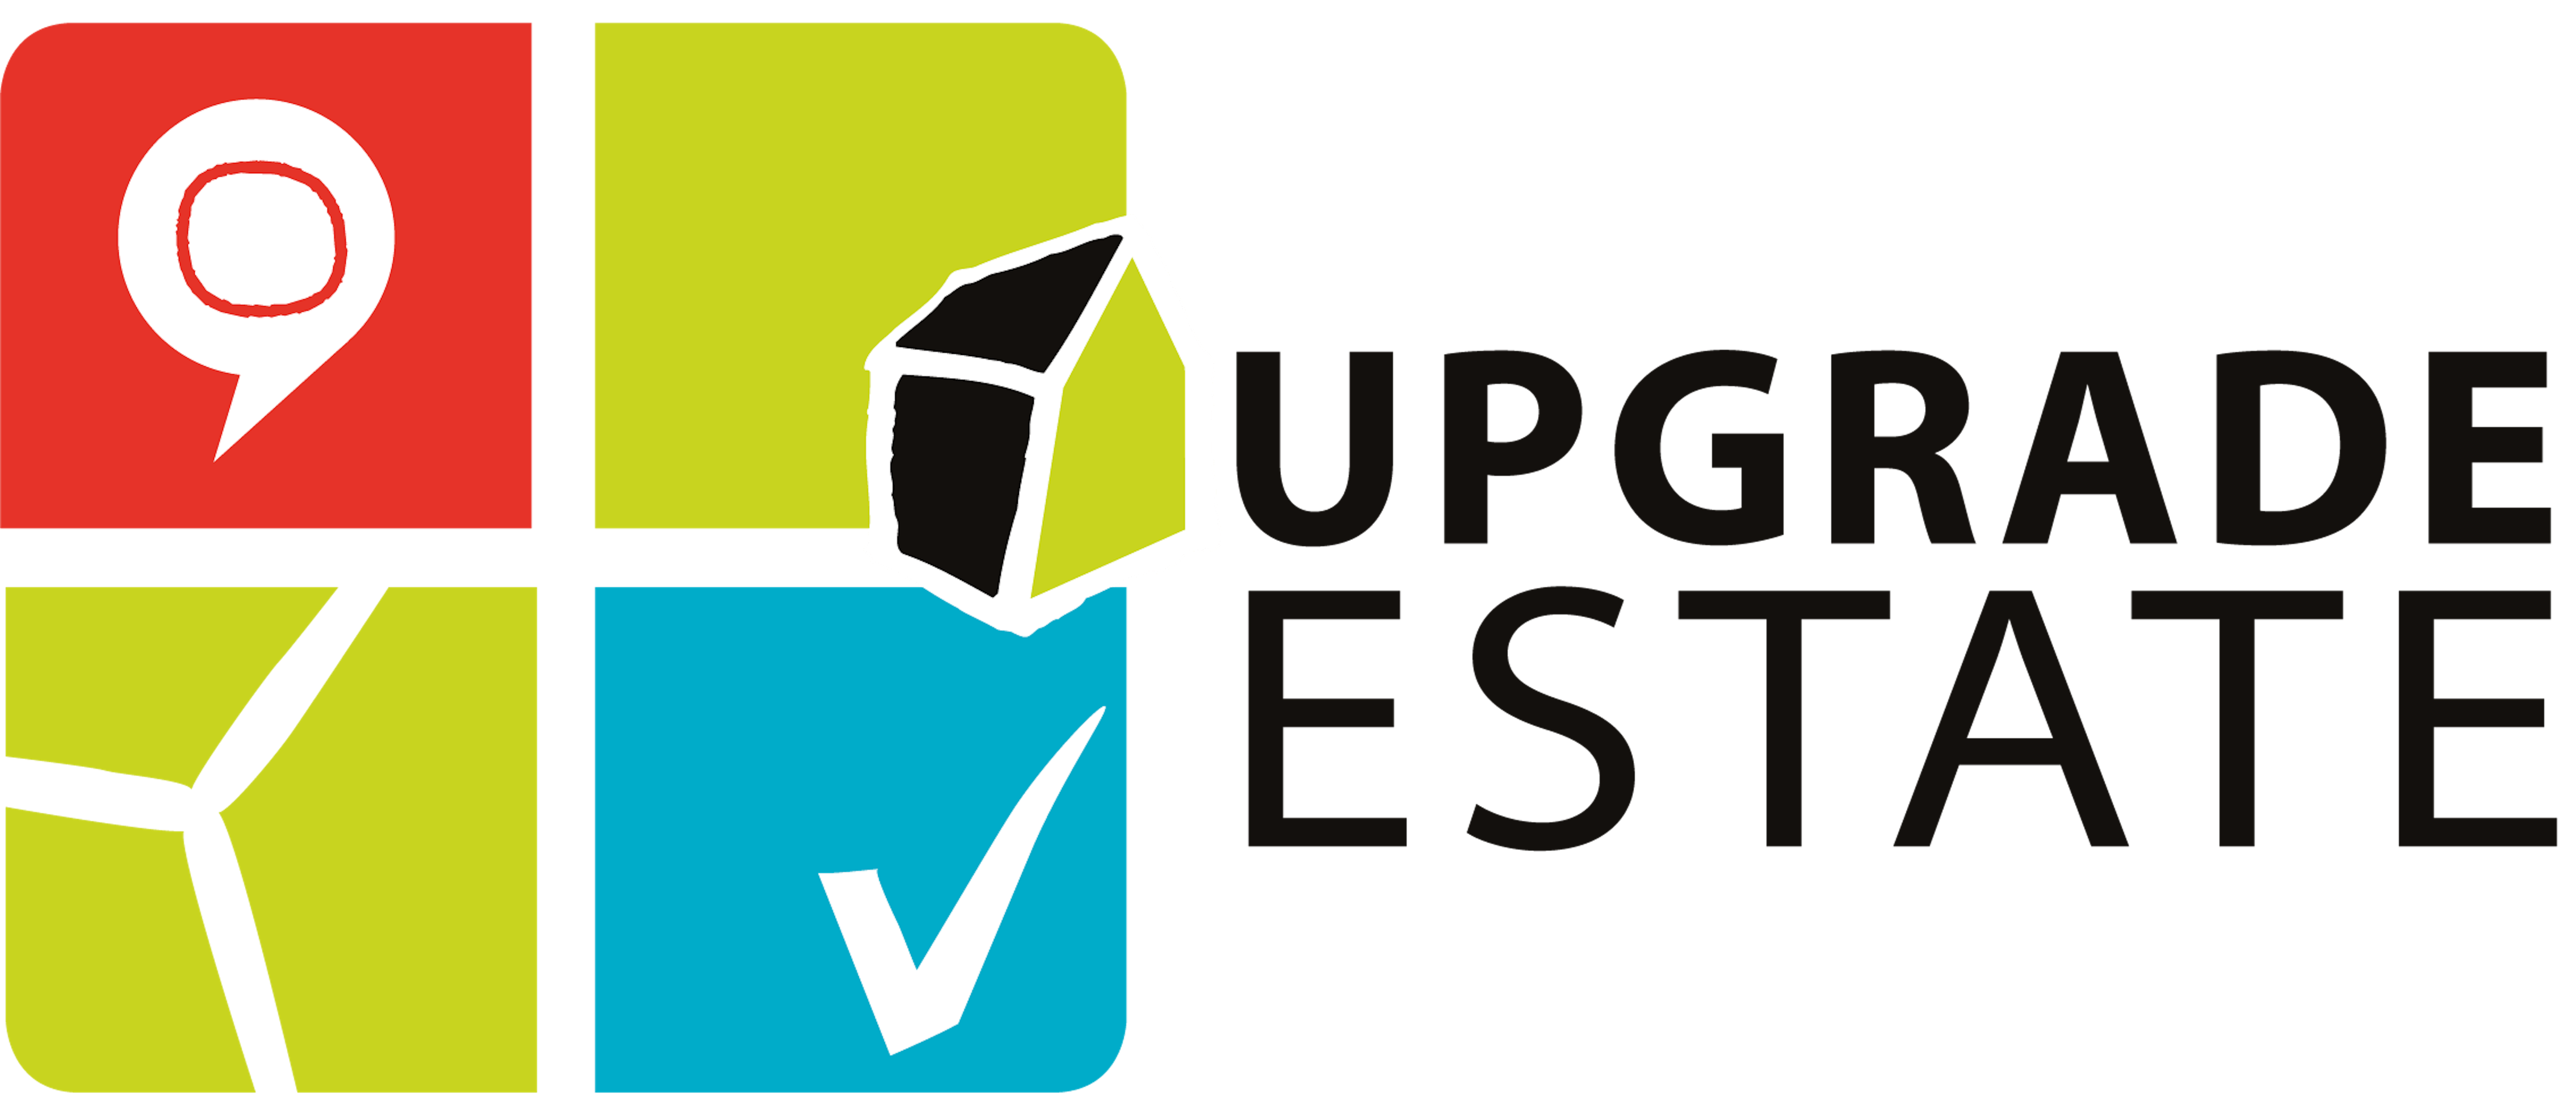 Upgrade Estate logo